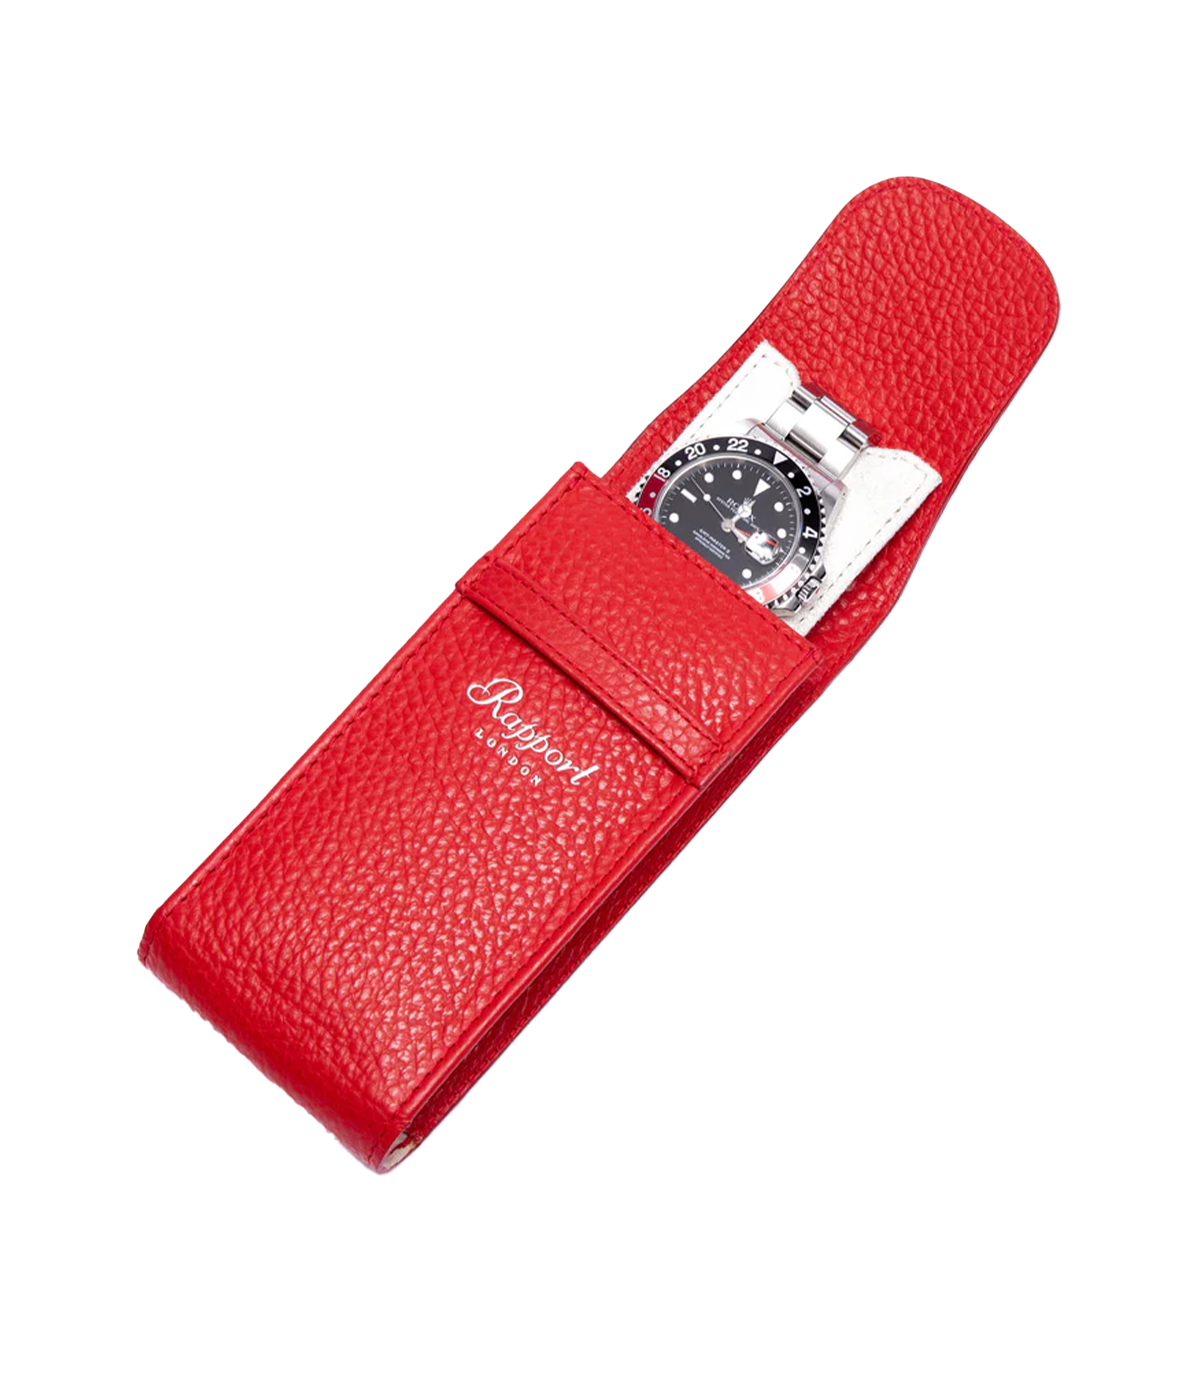 Portobello Leather Single Watch Pouch in Red